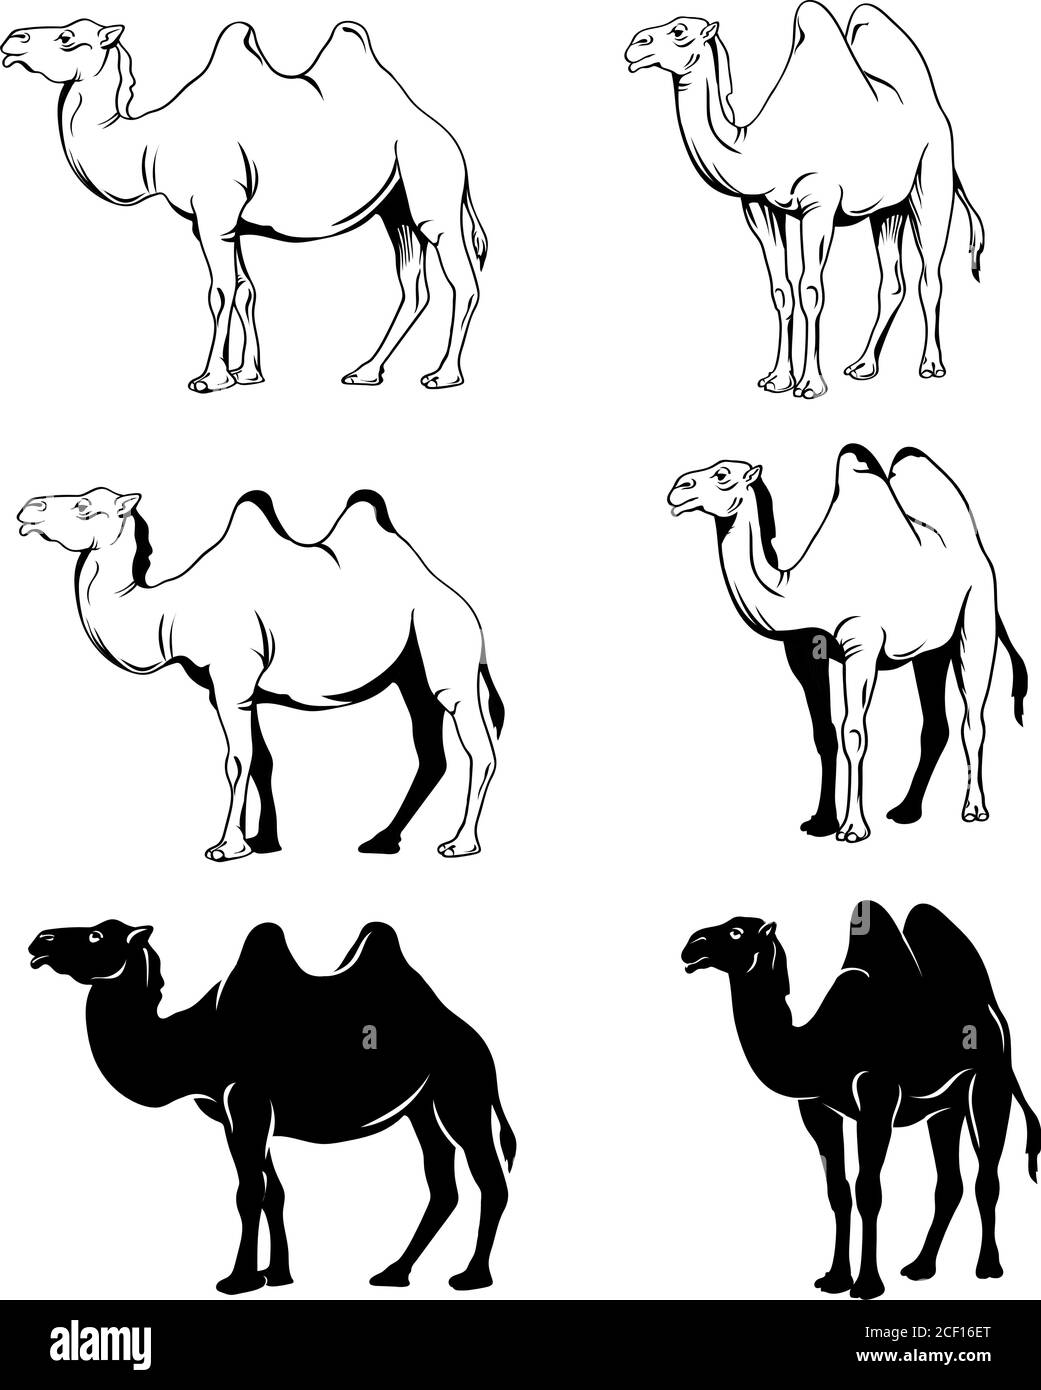 Camel, emblem, tourism, excursion, recreation, trip, sand, white, signboard, illustration, inscription, name, advertisement, style, animal, mammal Stock Vector